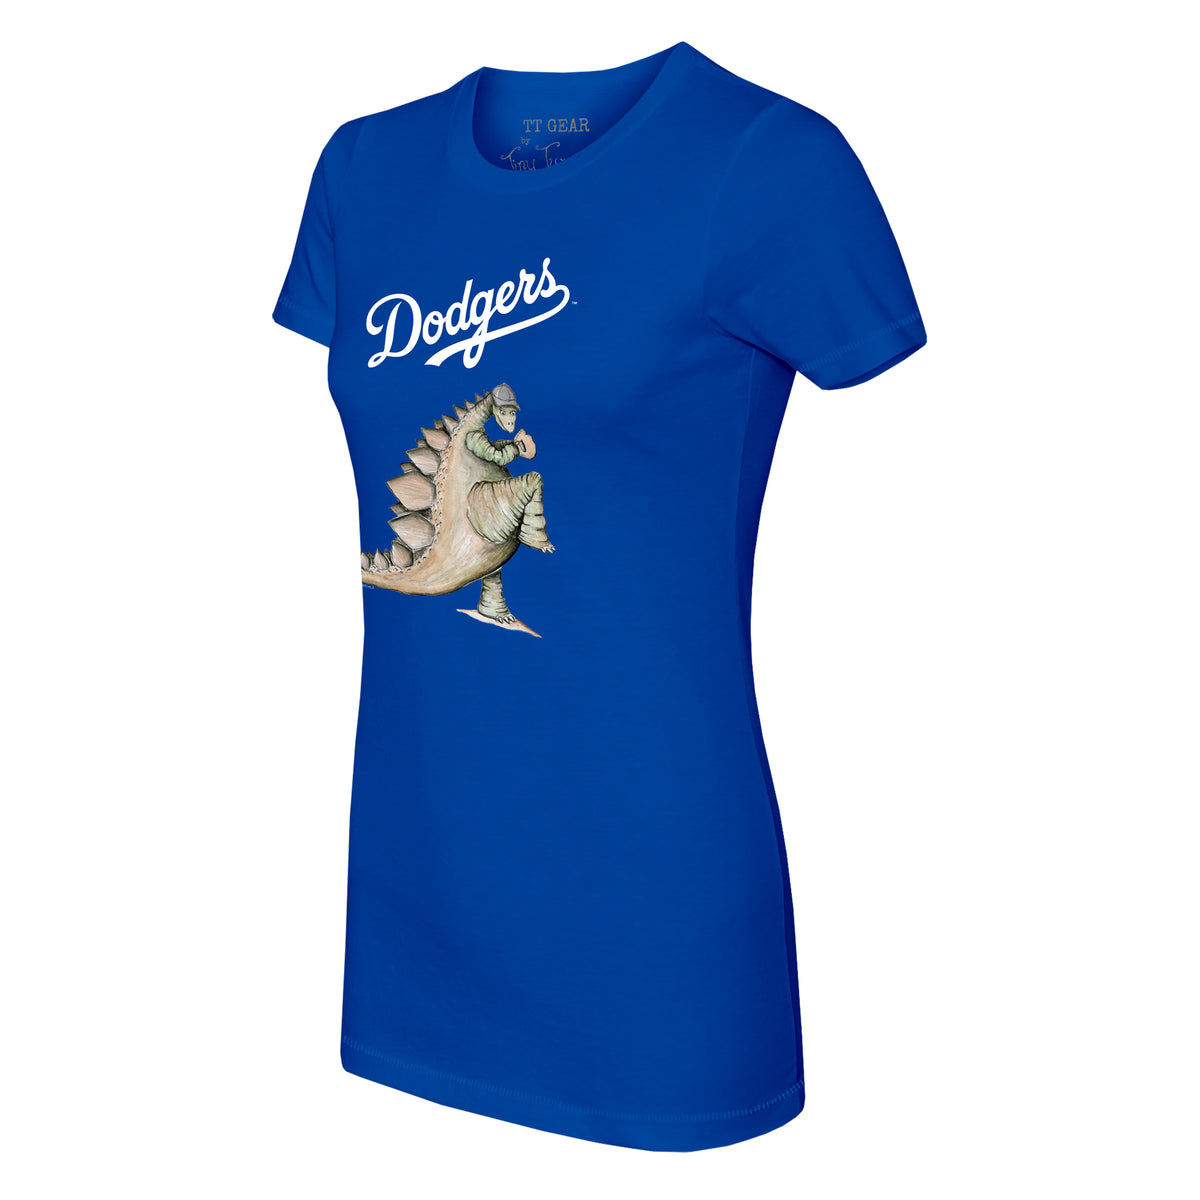 Los Angeles Dodgers Hot Bats Tee Shirt 18M / Royal Blue